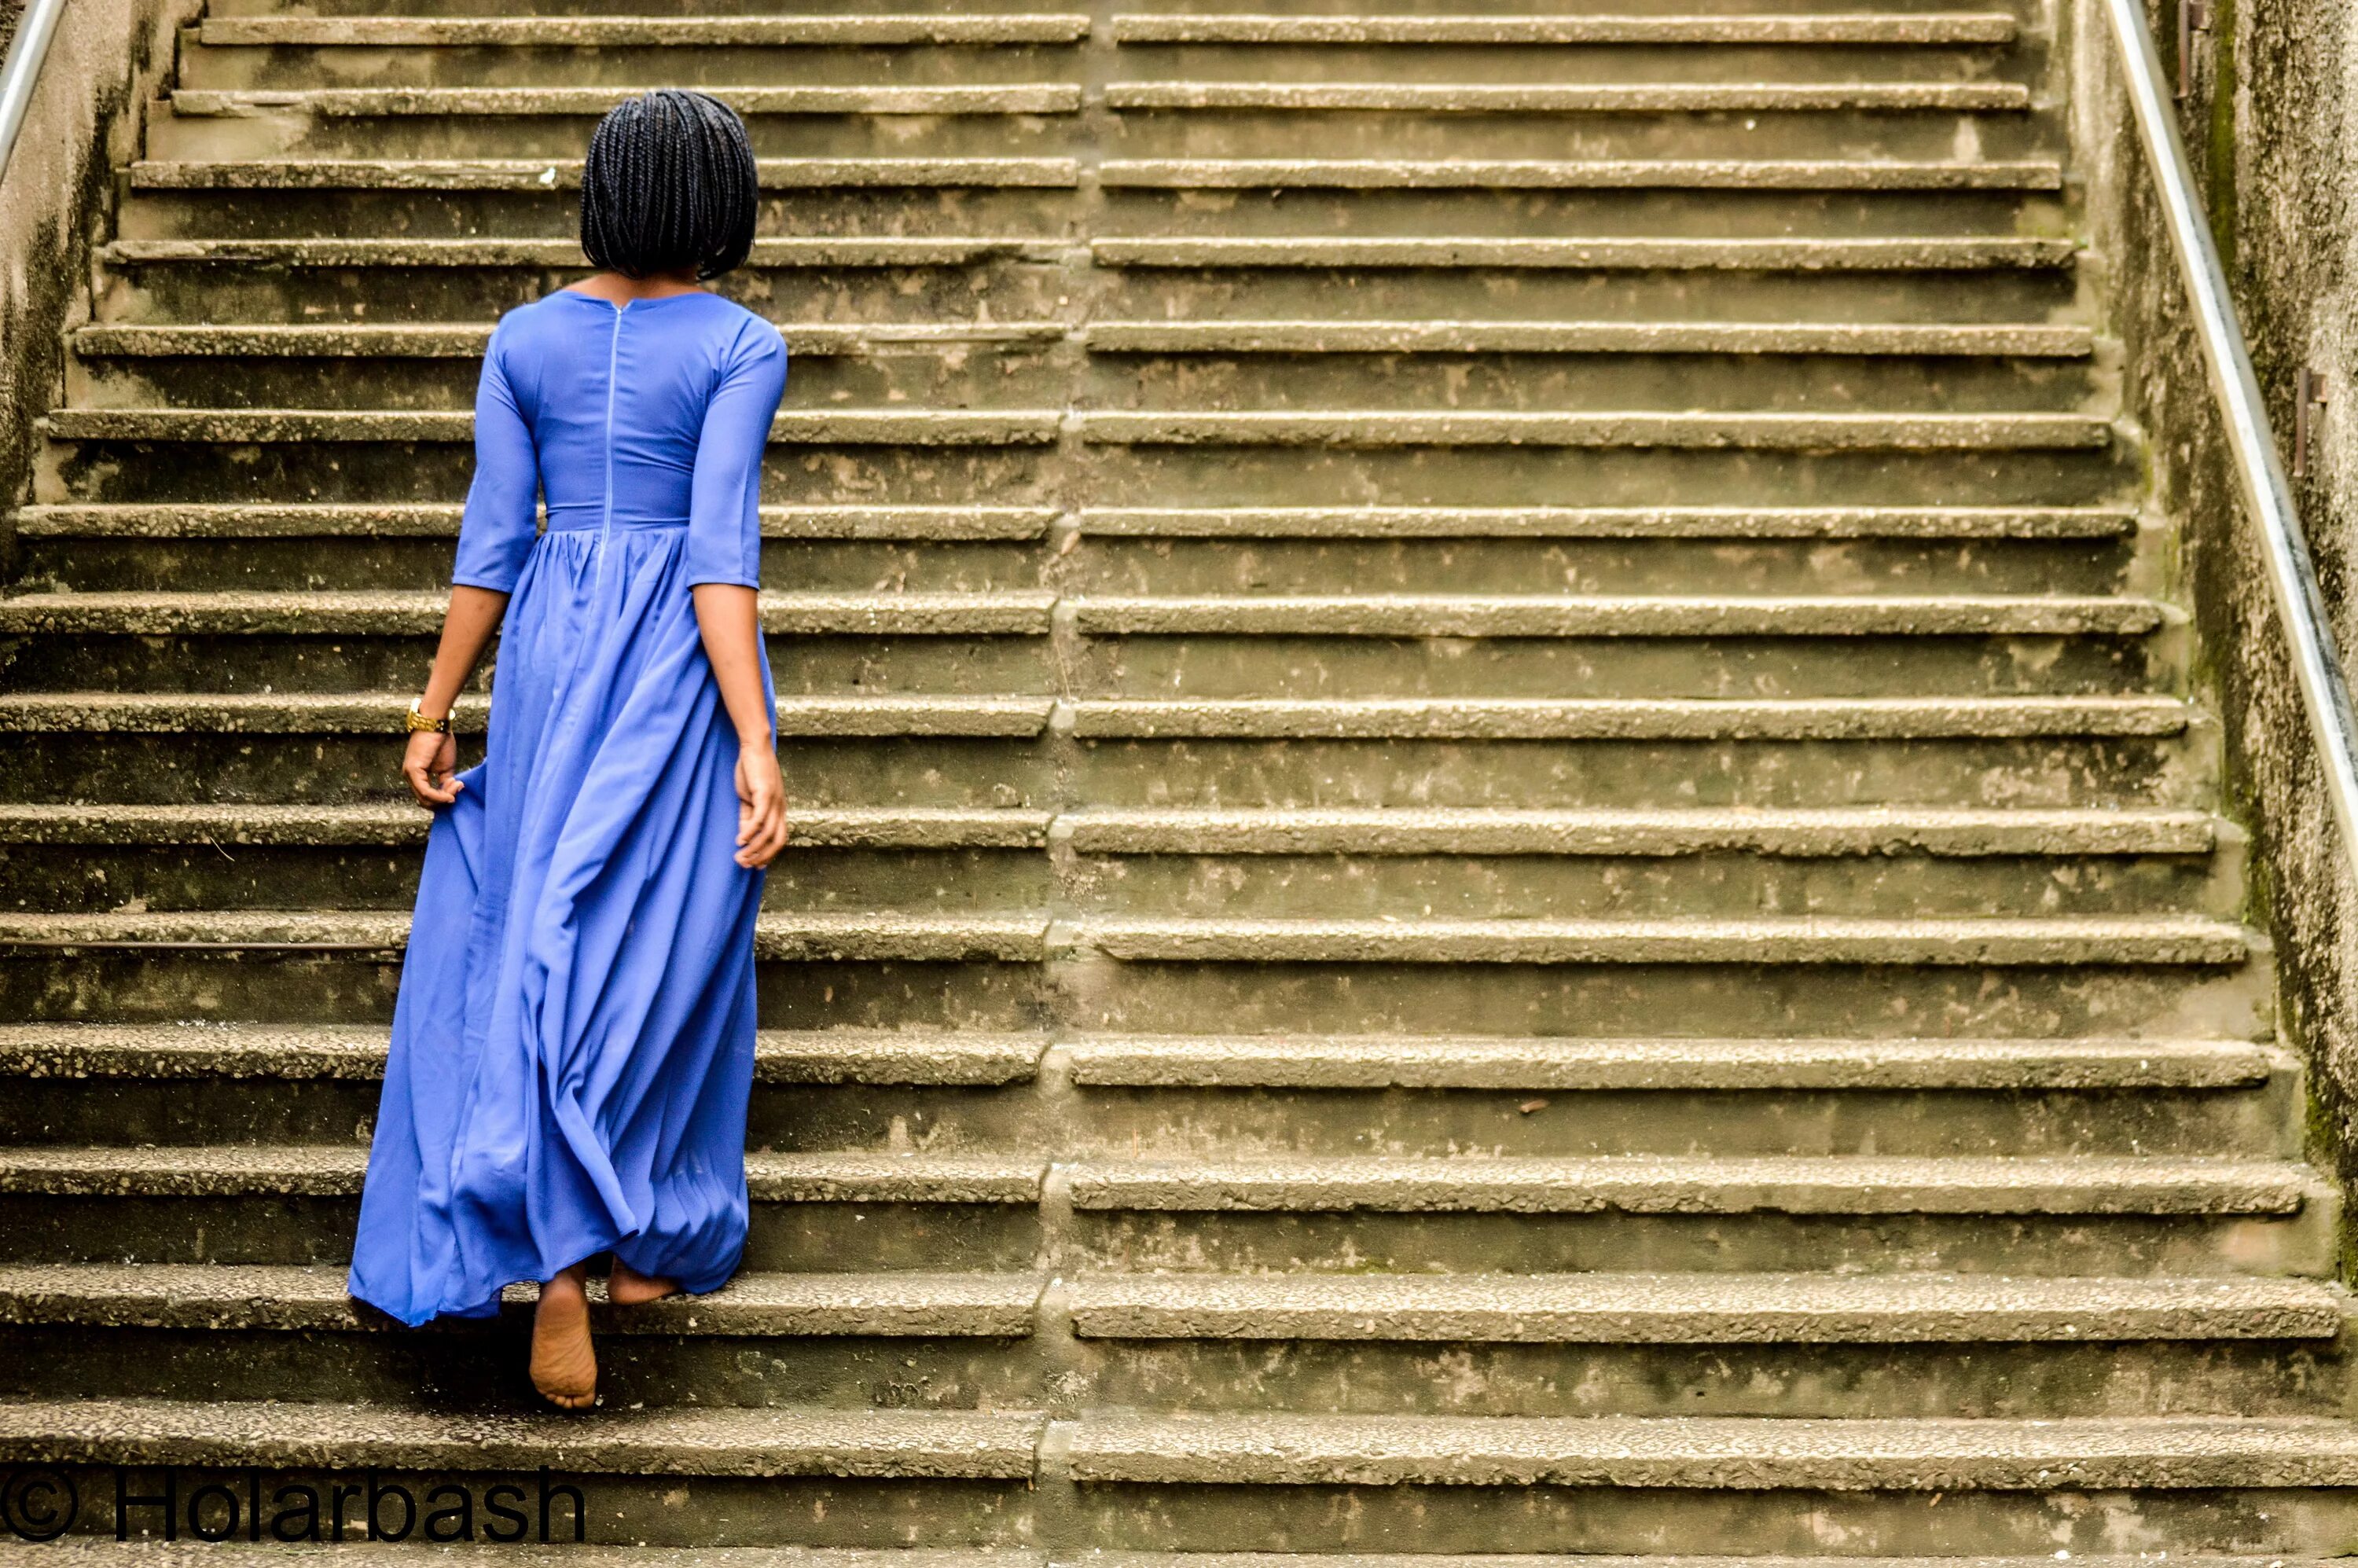 Девушка поднимается по лестнице. Девушка спускается по лестнице в платье. Девушка в платье. Девушка на лестнице.